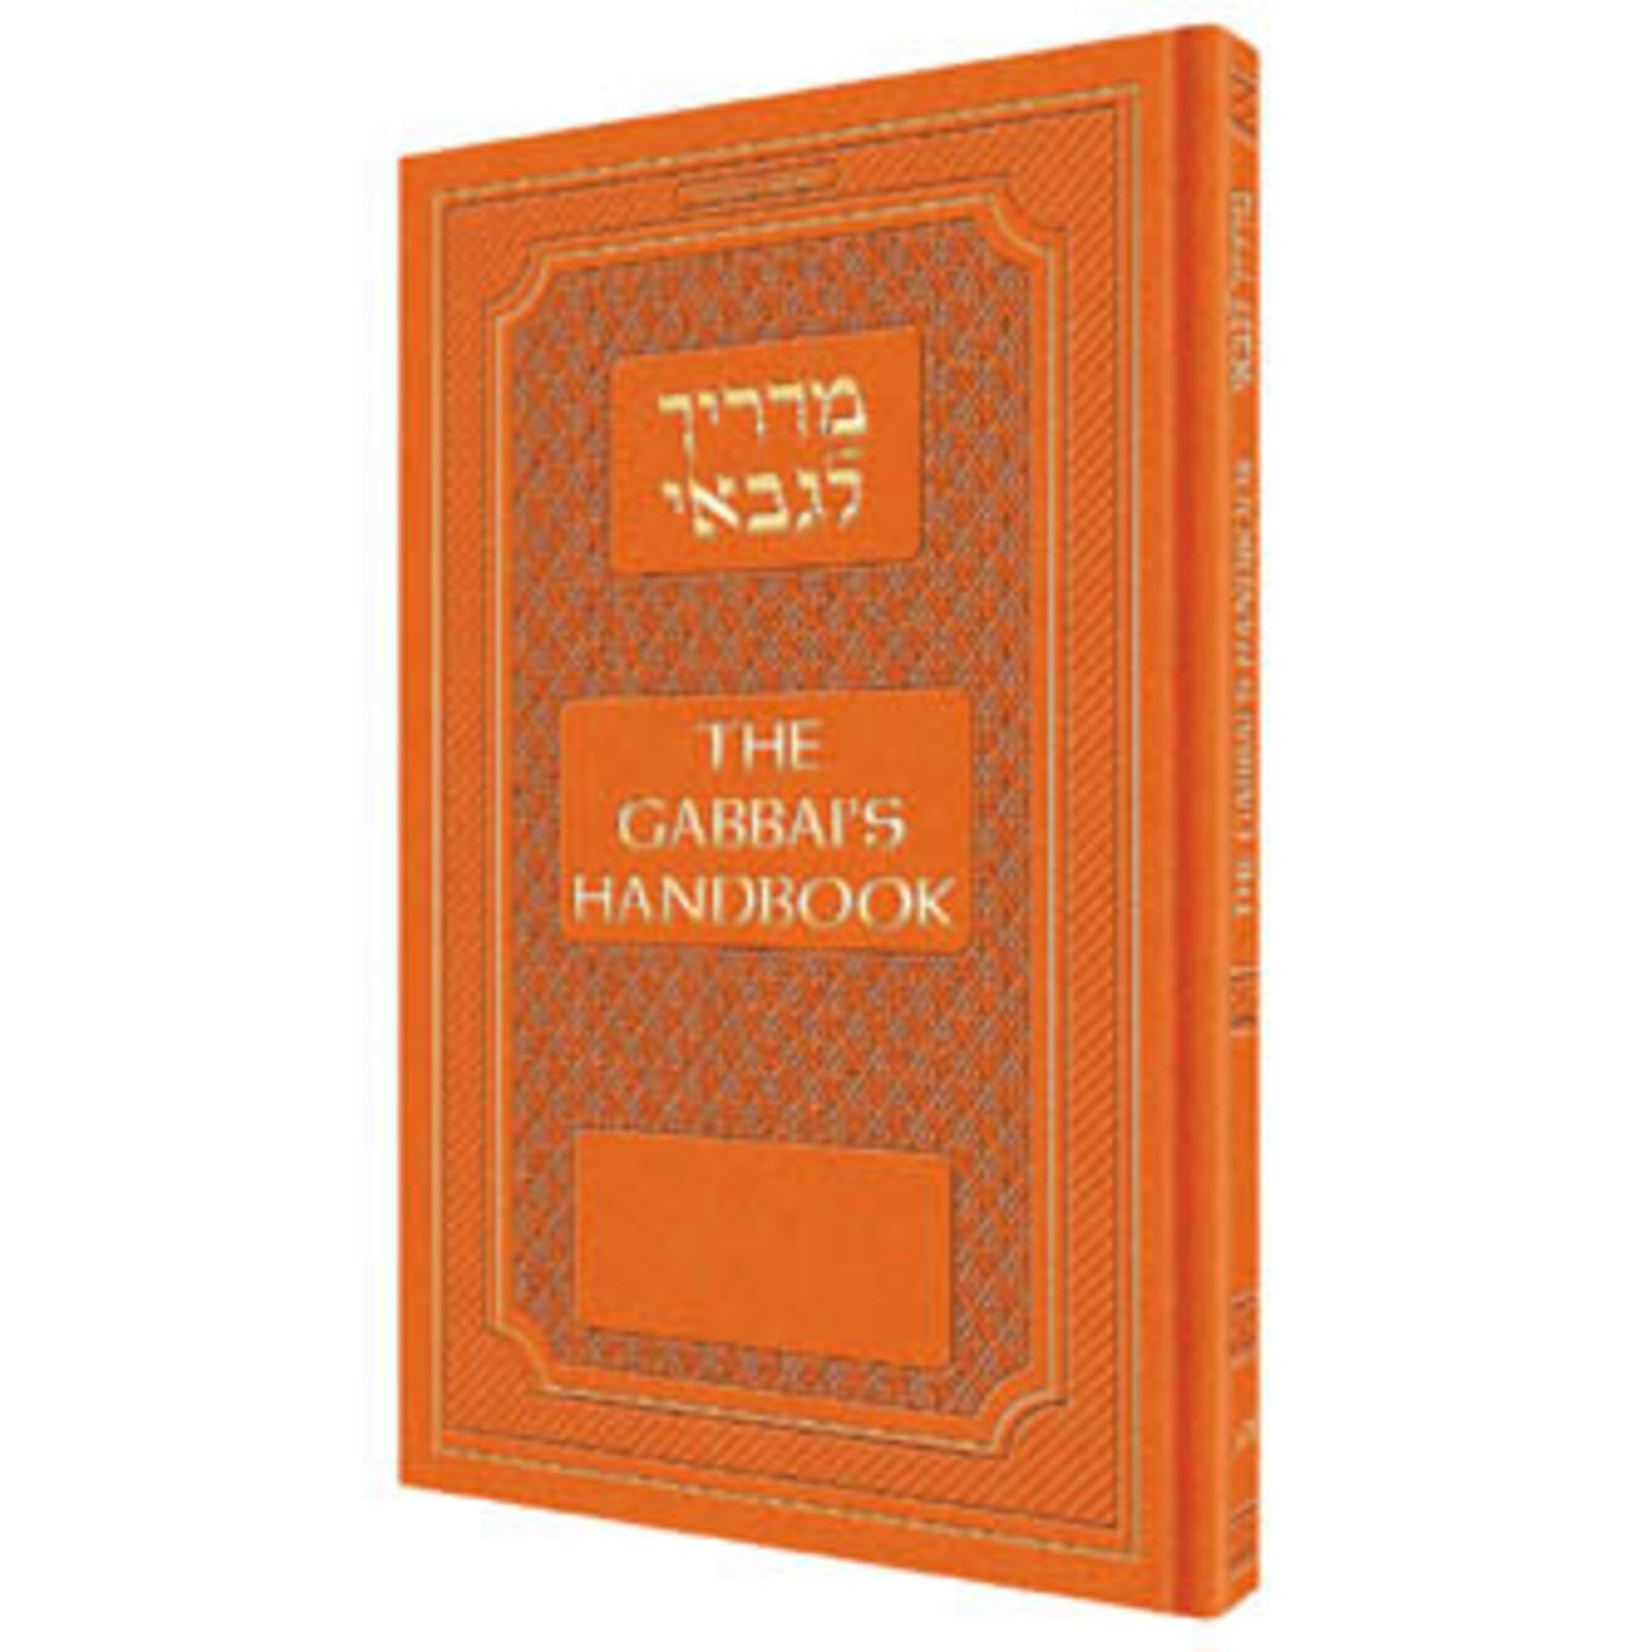 Gabbai's Handbook